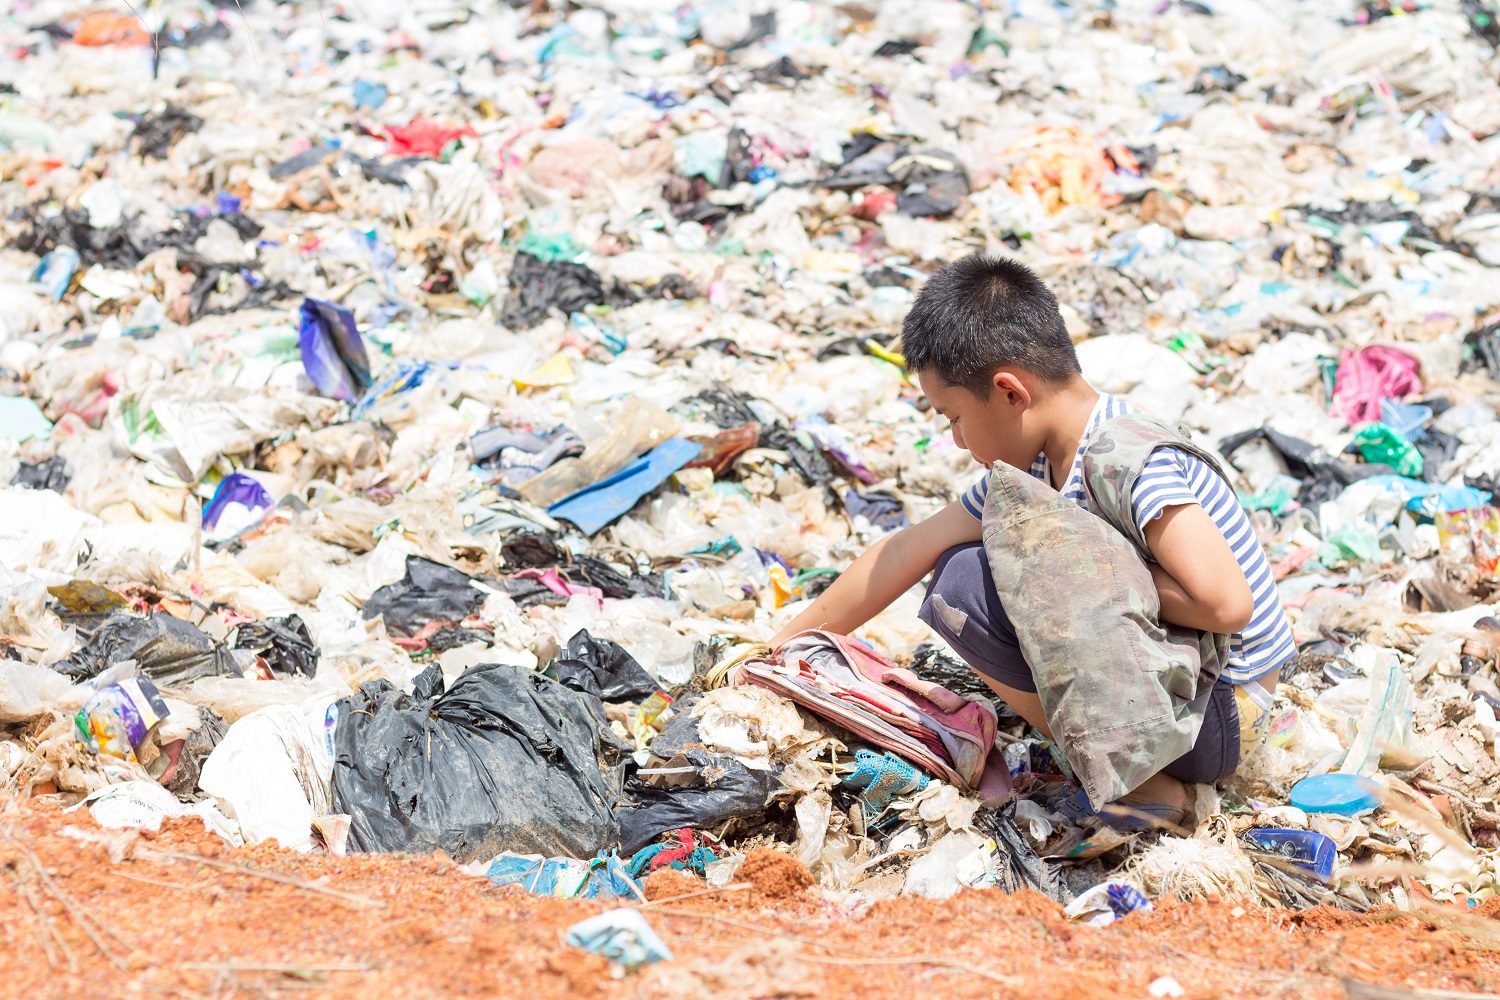 Child in Asia going through plastic pollution